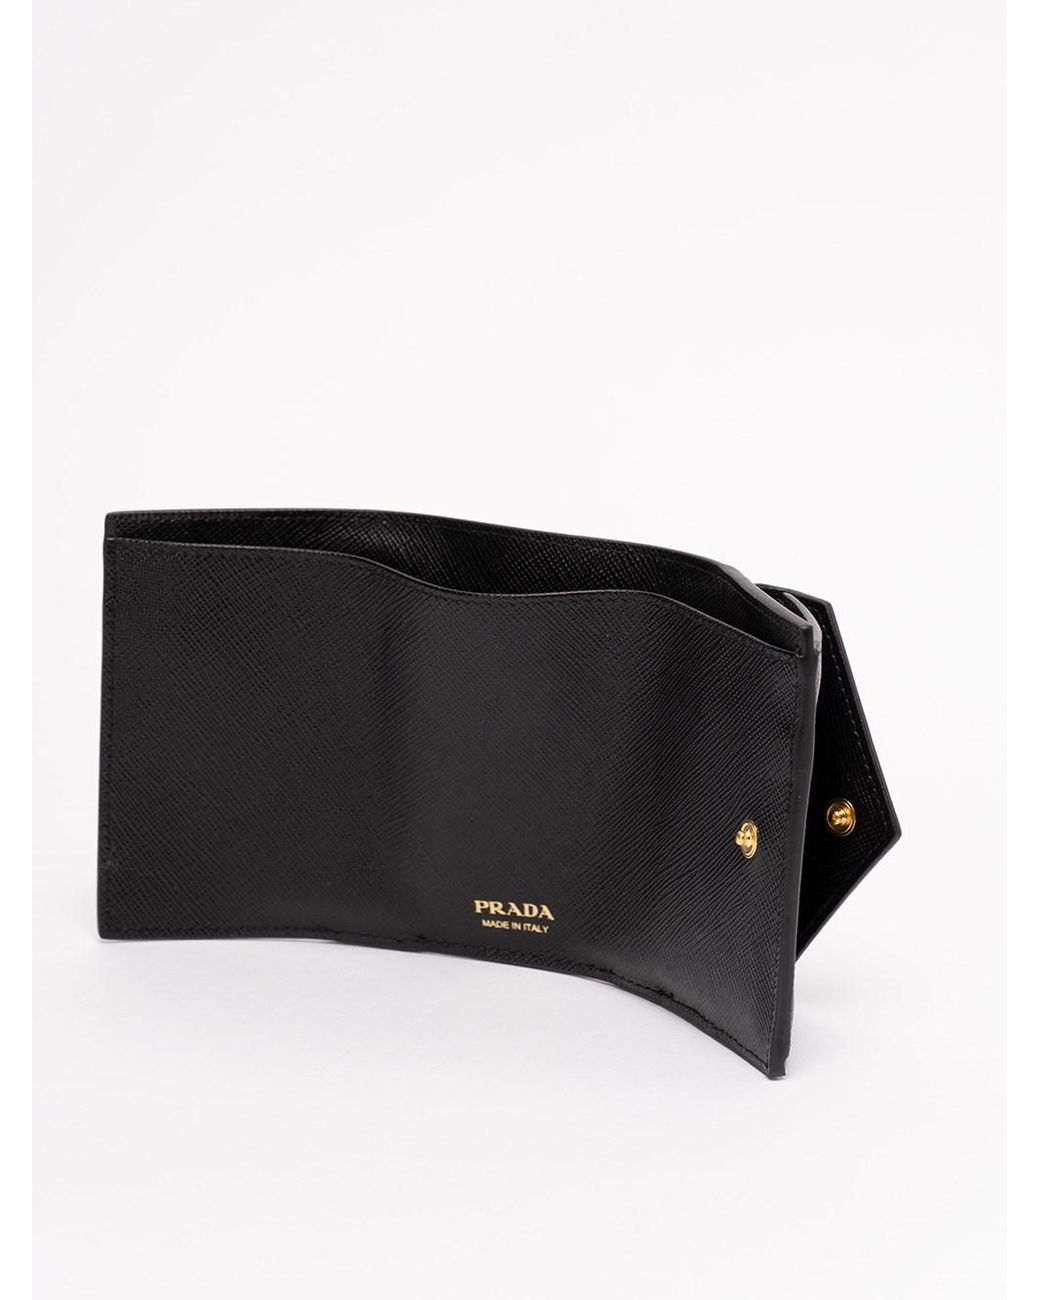 Prada Beige Saffiano Leather Bow Zip Around Wallet Prada | TLC